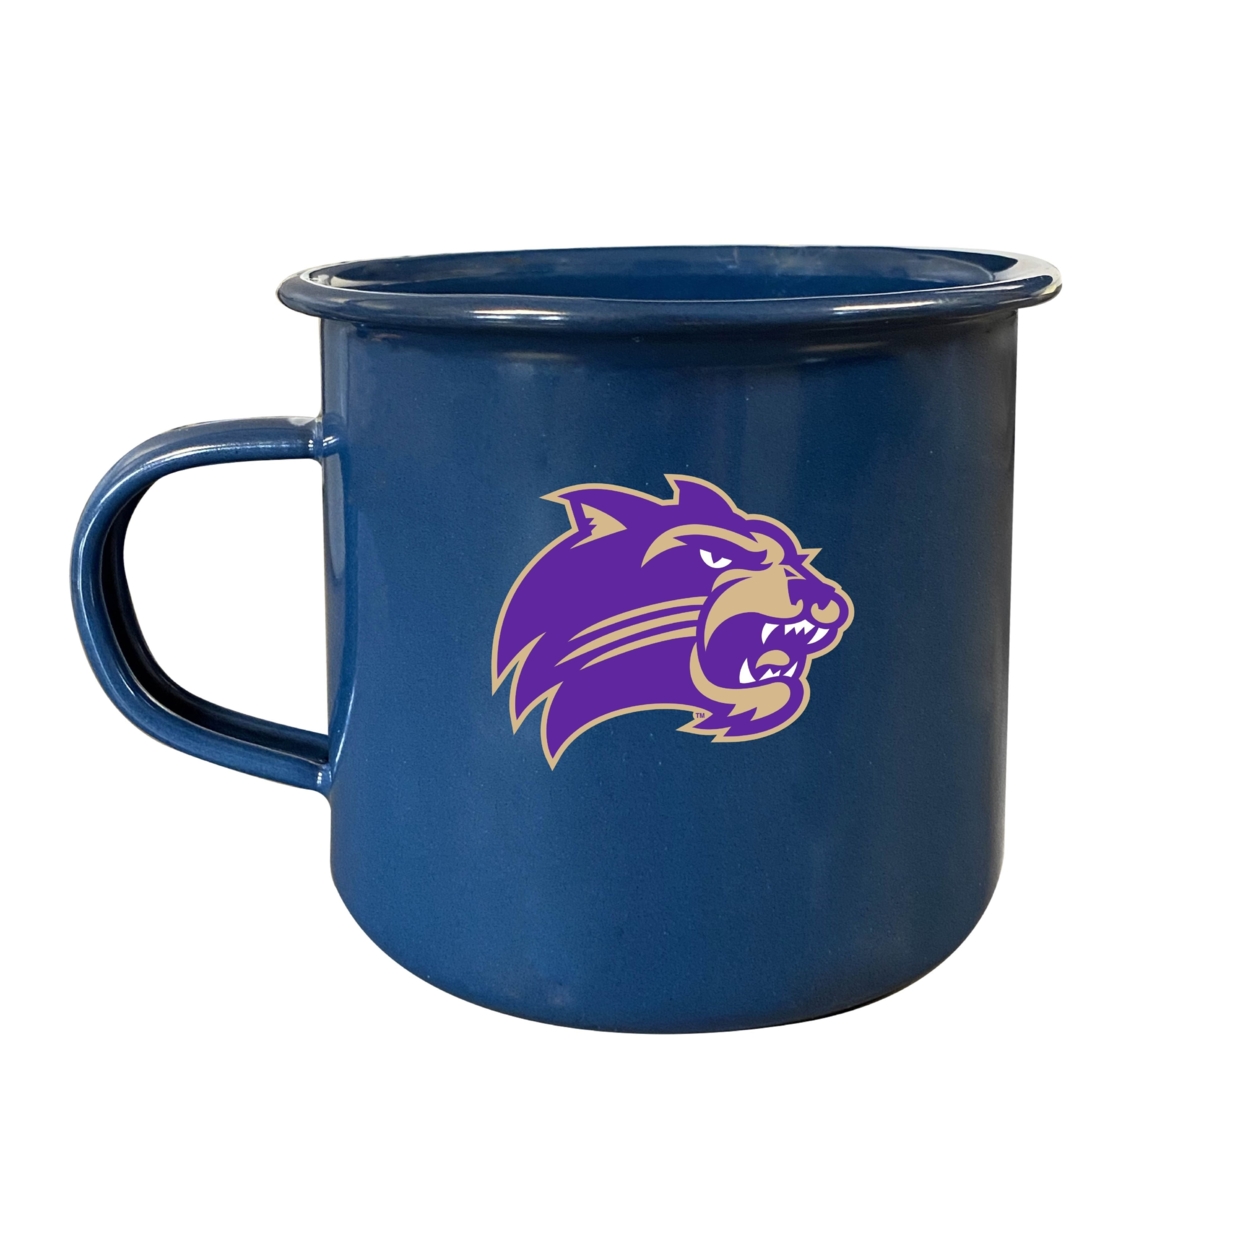 Western Carolina University Tin Camper Coffee Mug - Choose Your Color - Navy